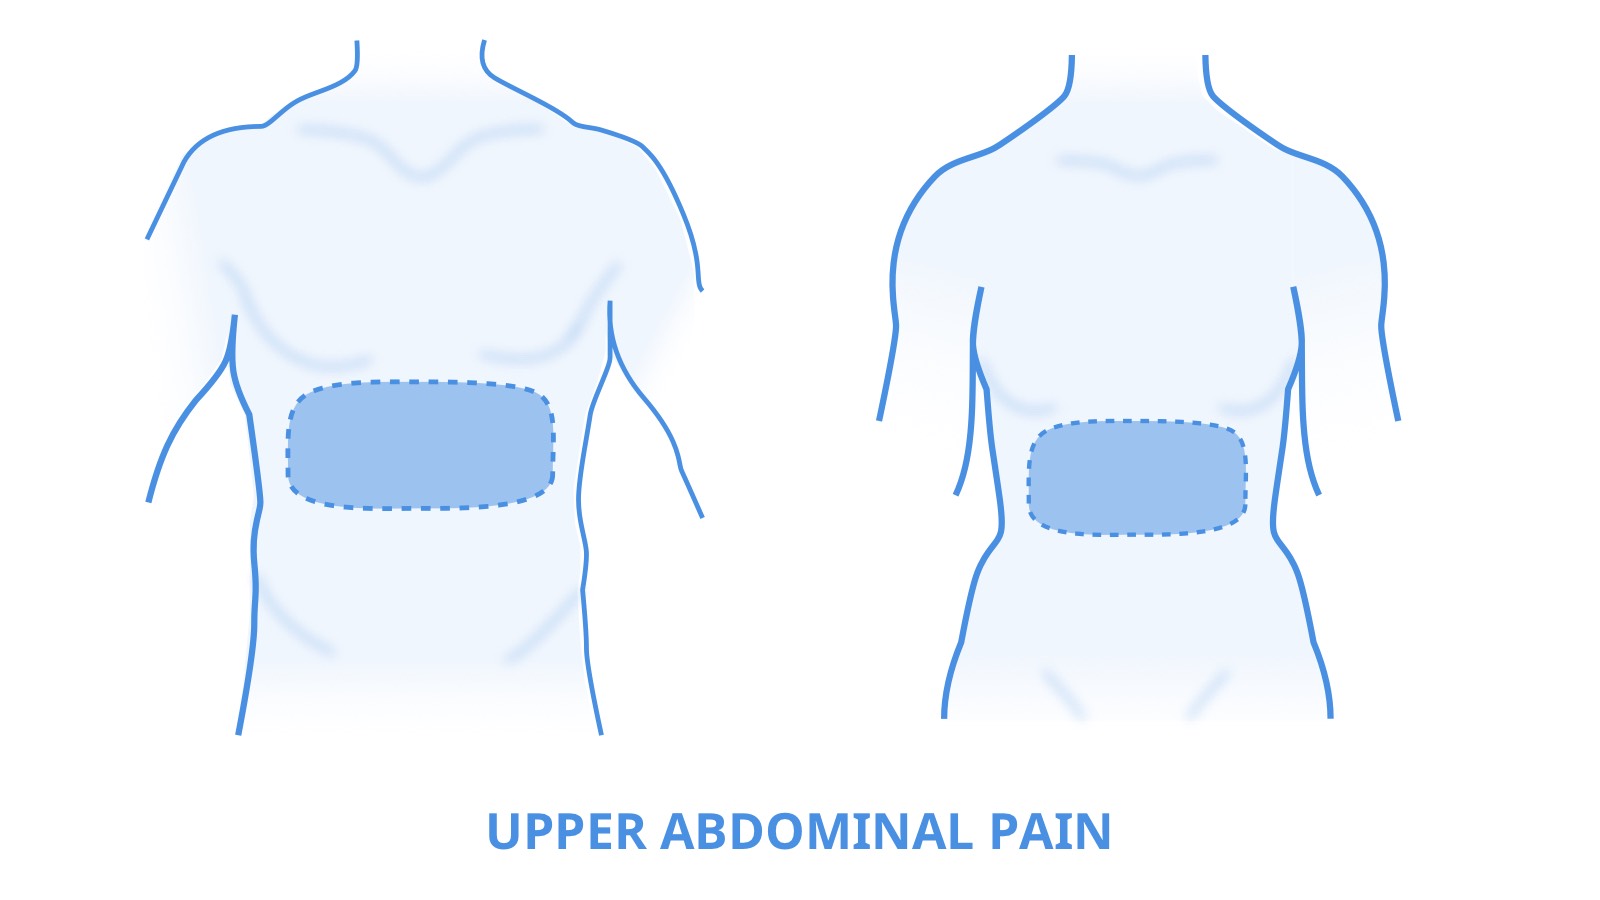 Image highlighting the upper abdomen